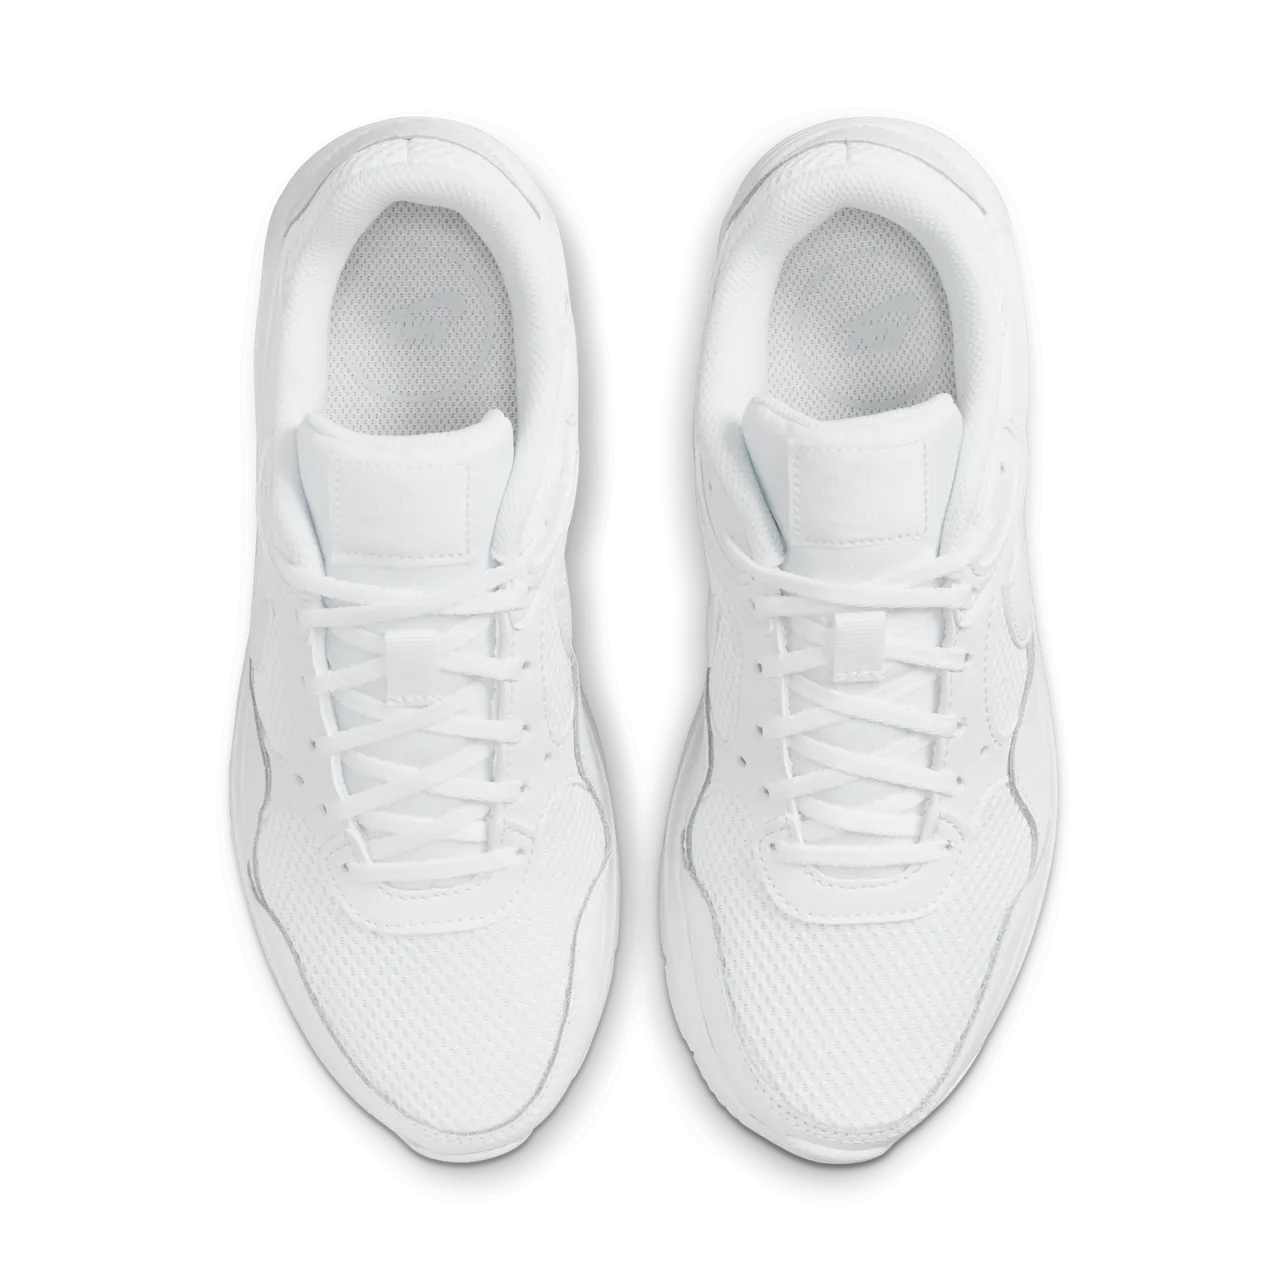 Nike Air Max SC Women's Shoes - White